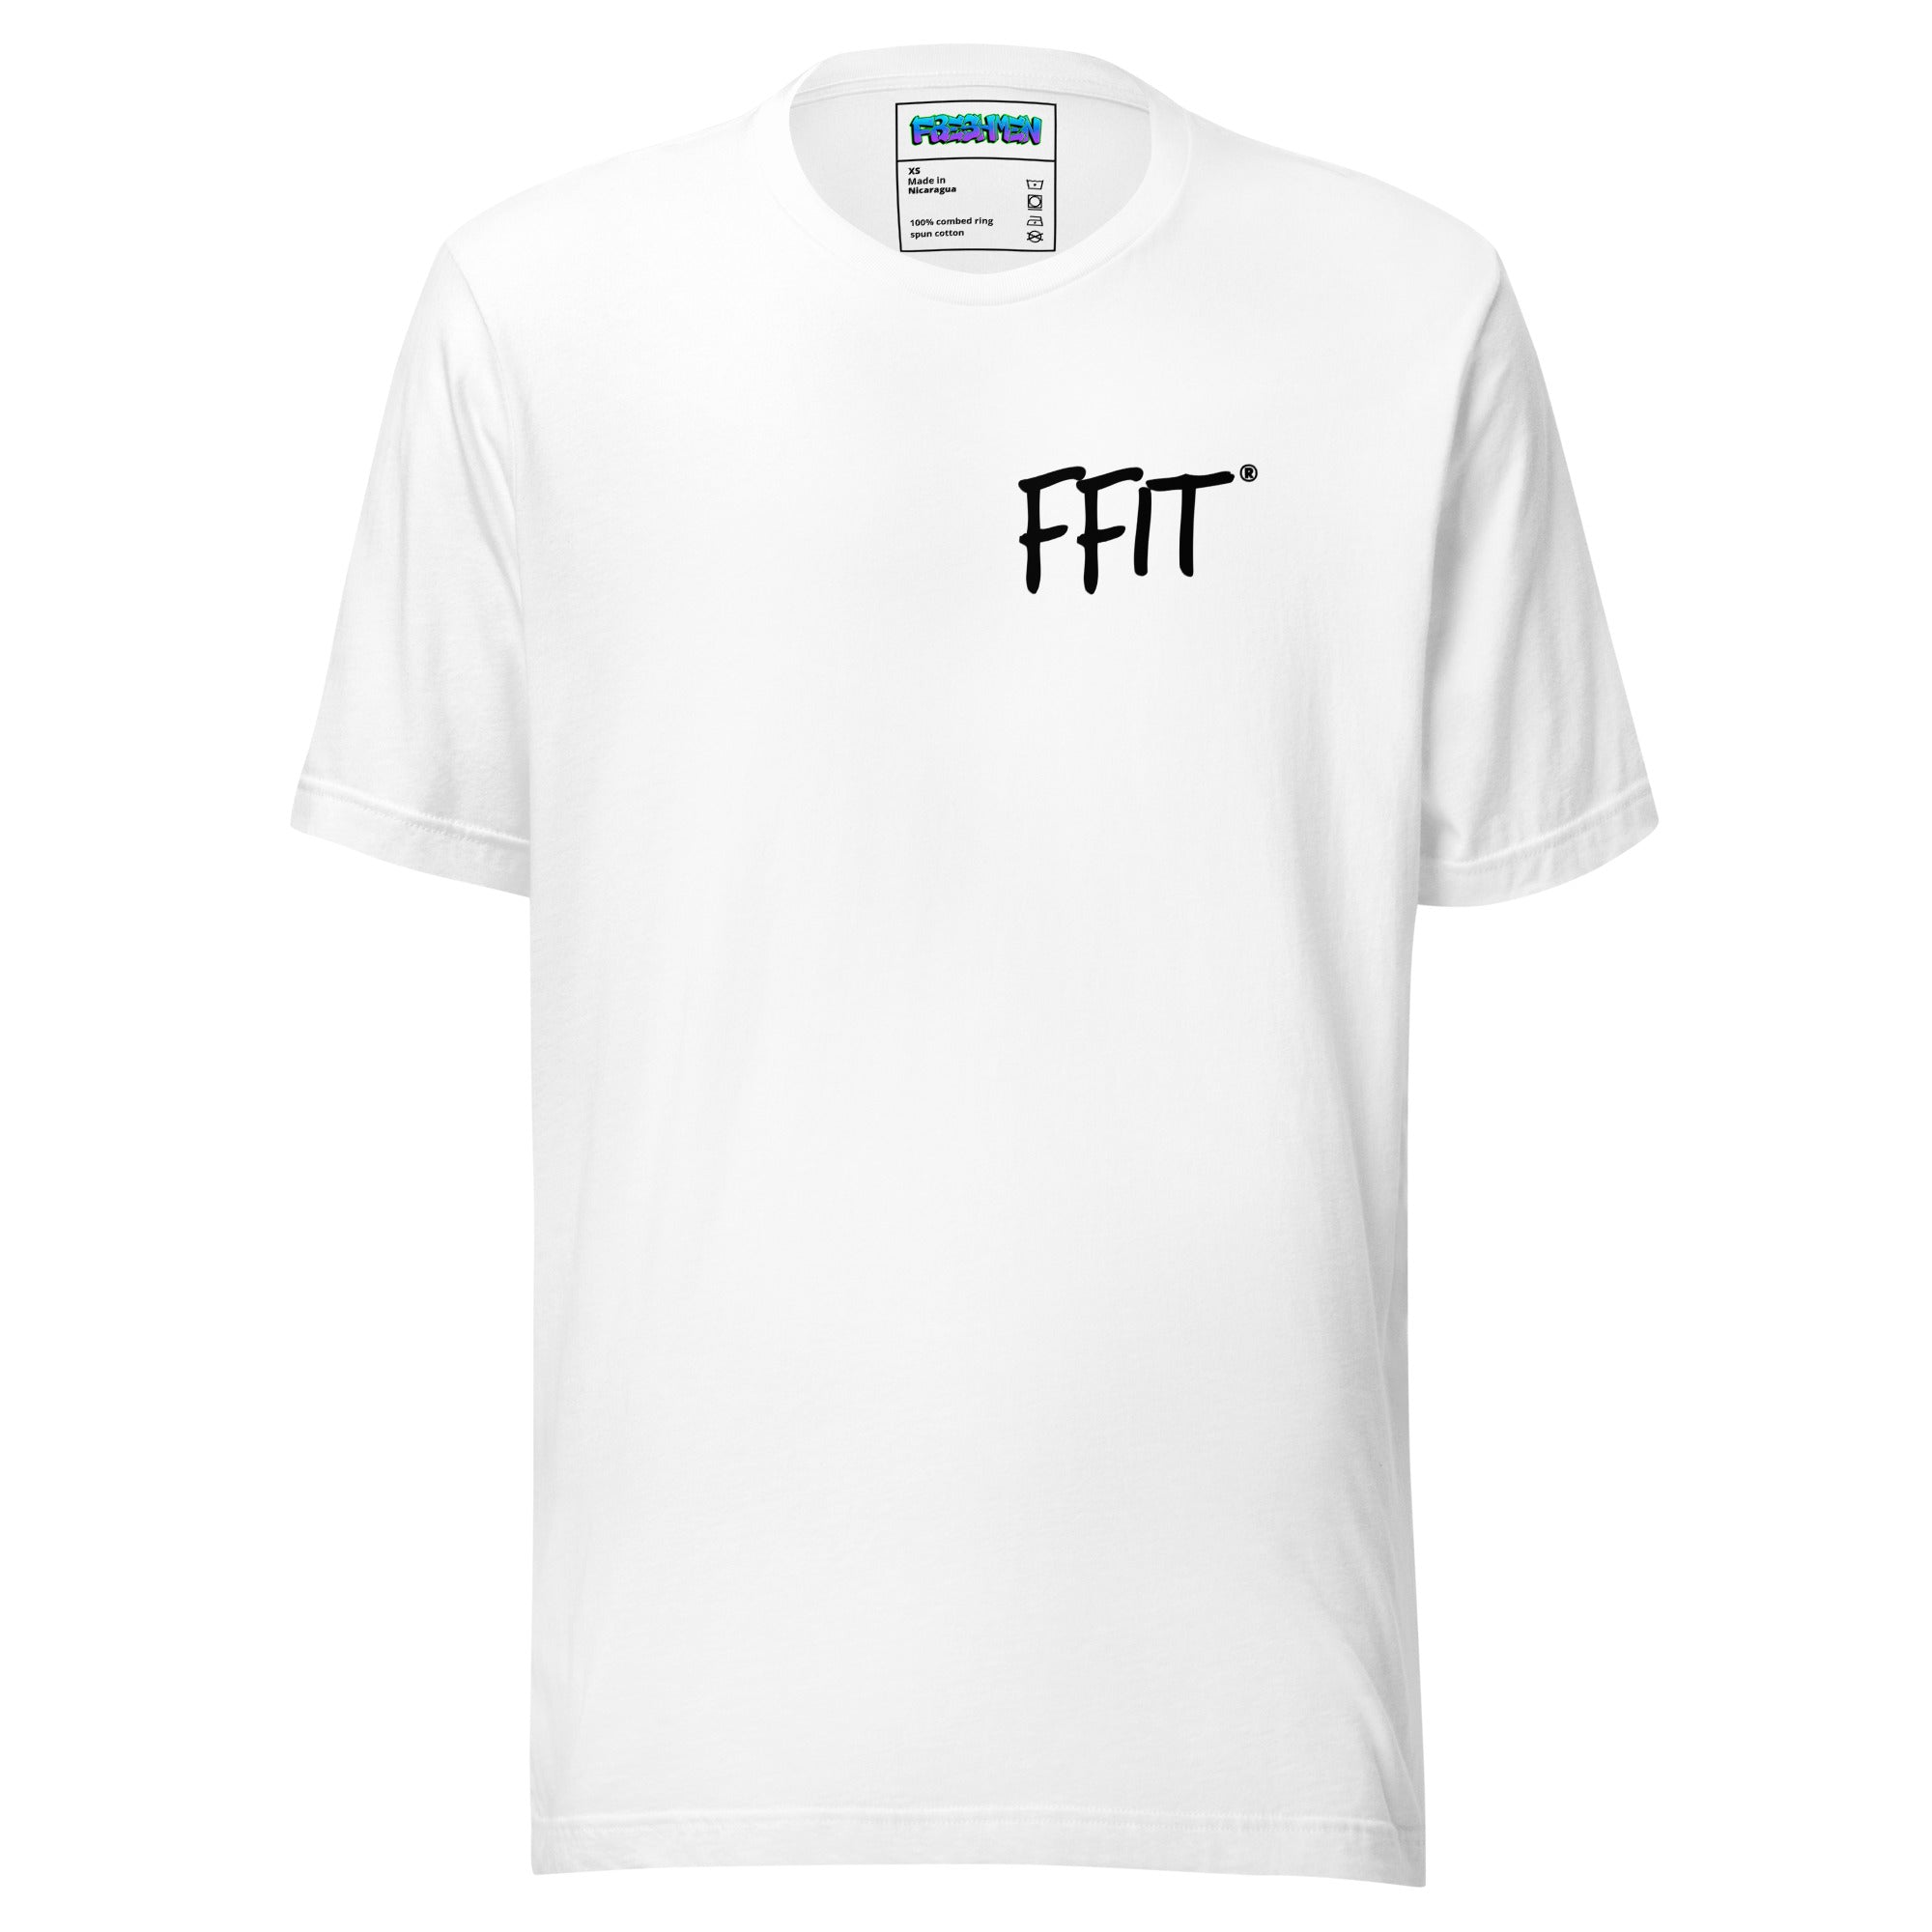 Freshmen FFIT Statement Unisex T-Shirt White